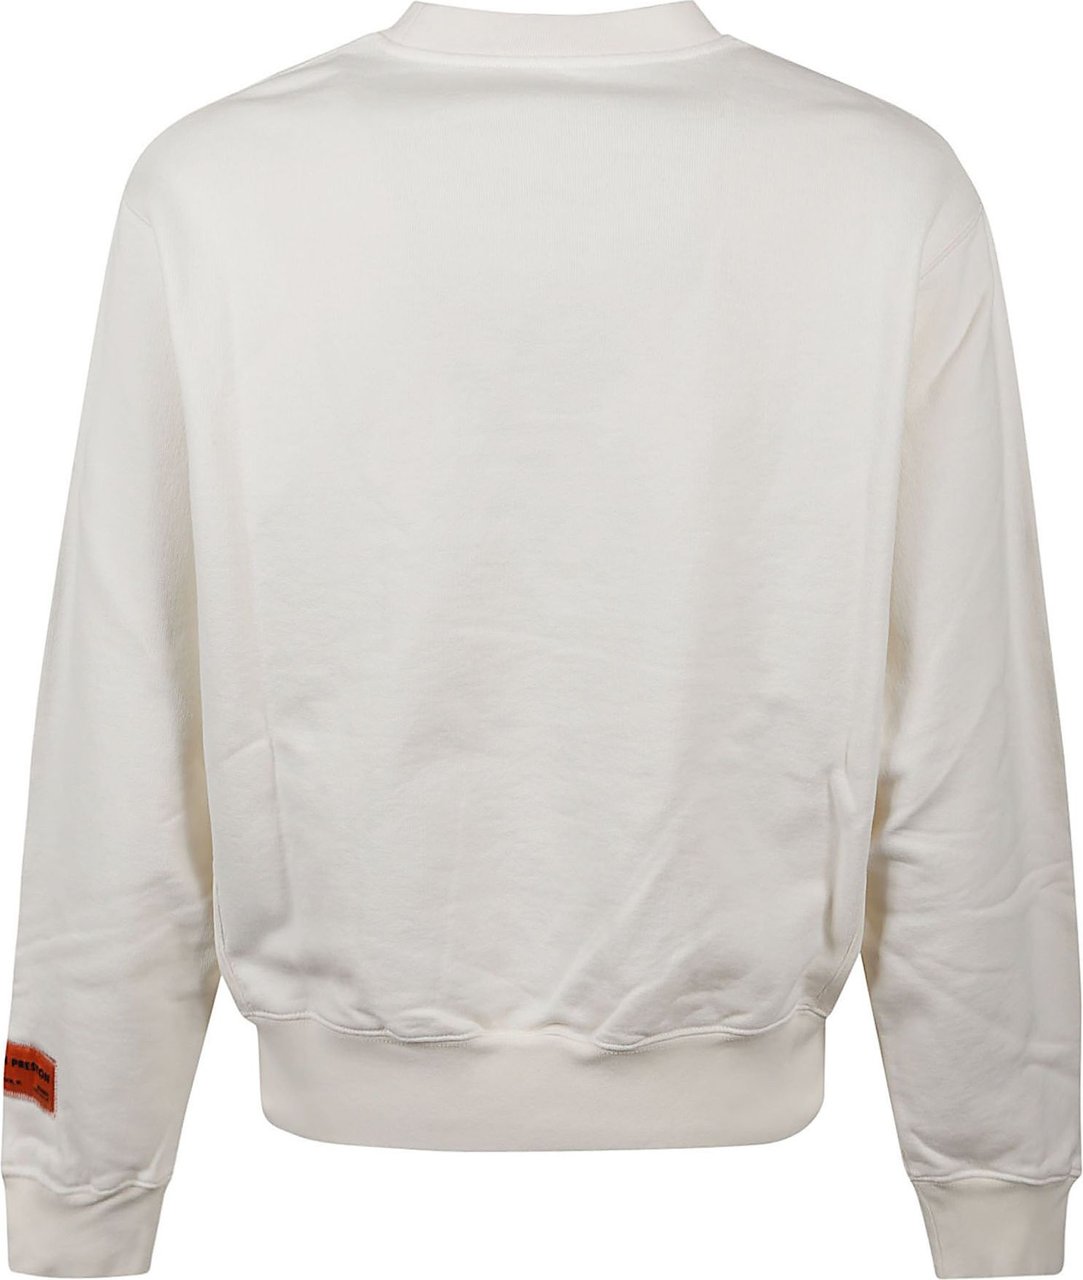 Heron Preston Hpny Regular Sweatshirt White Wit